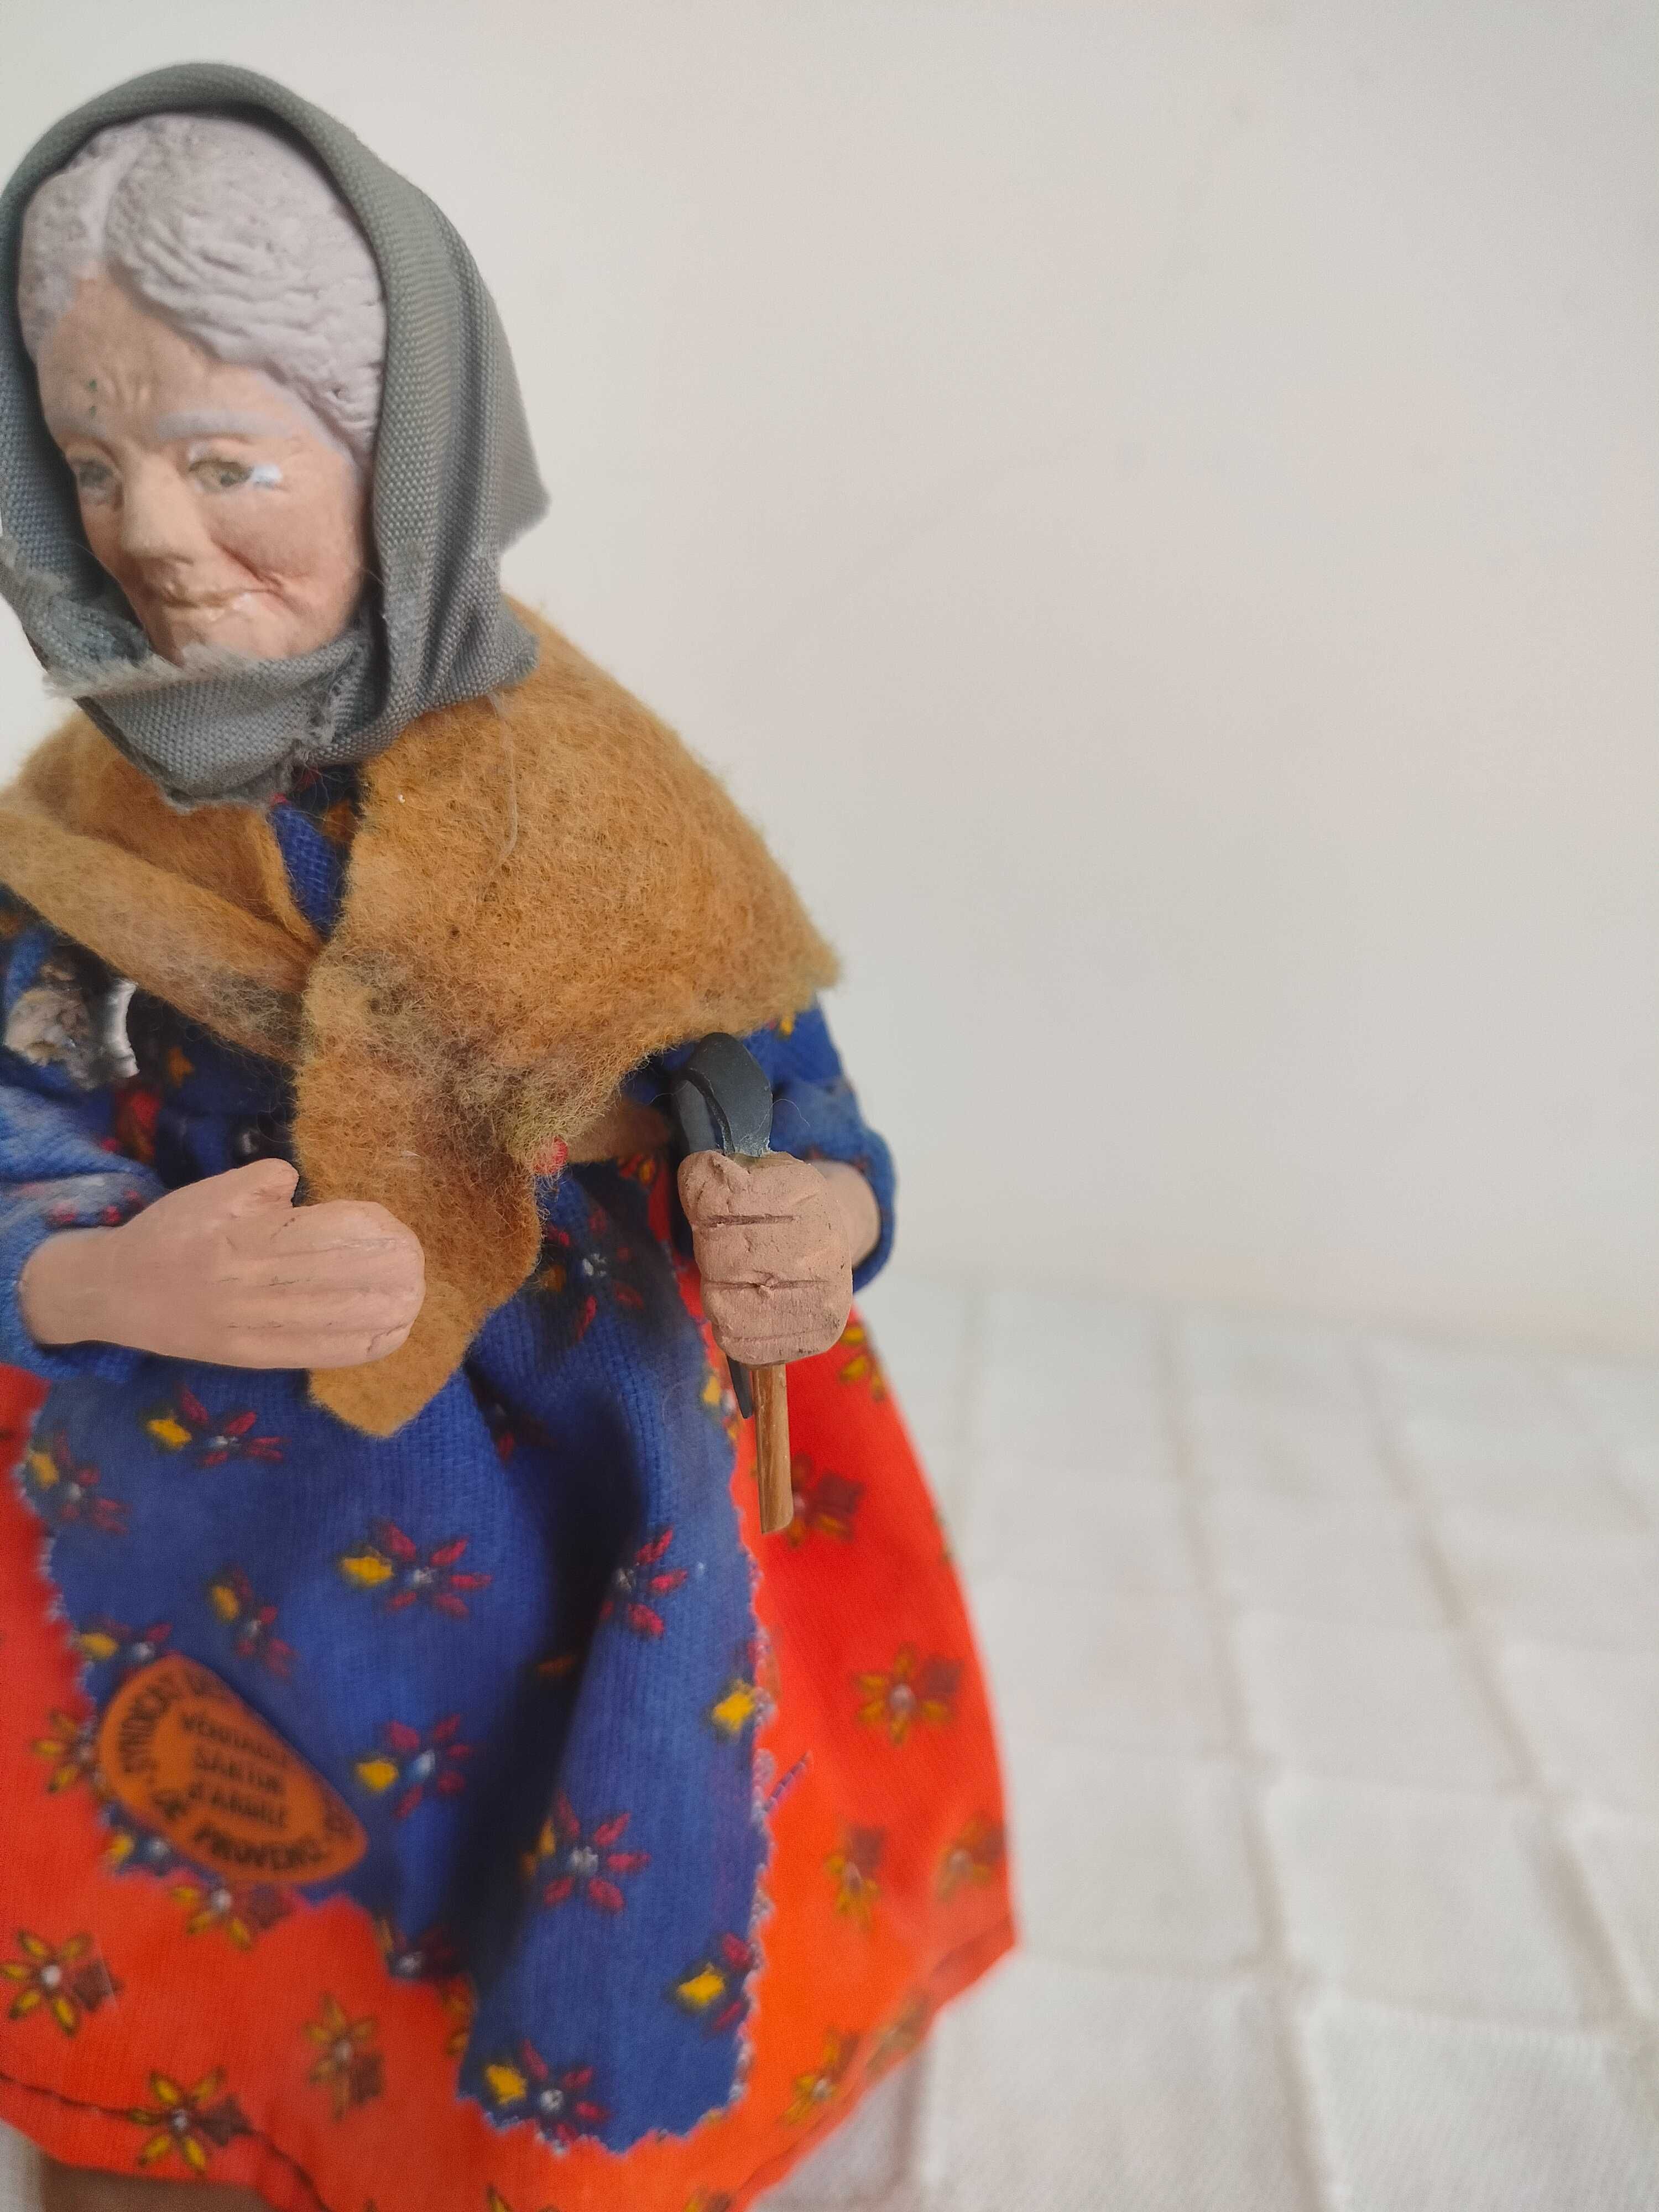 Santon de Provance

Figurka starej kobiety - W Chustce